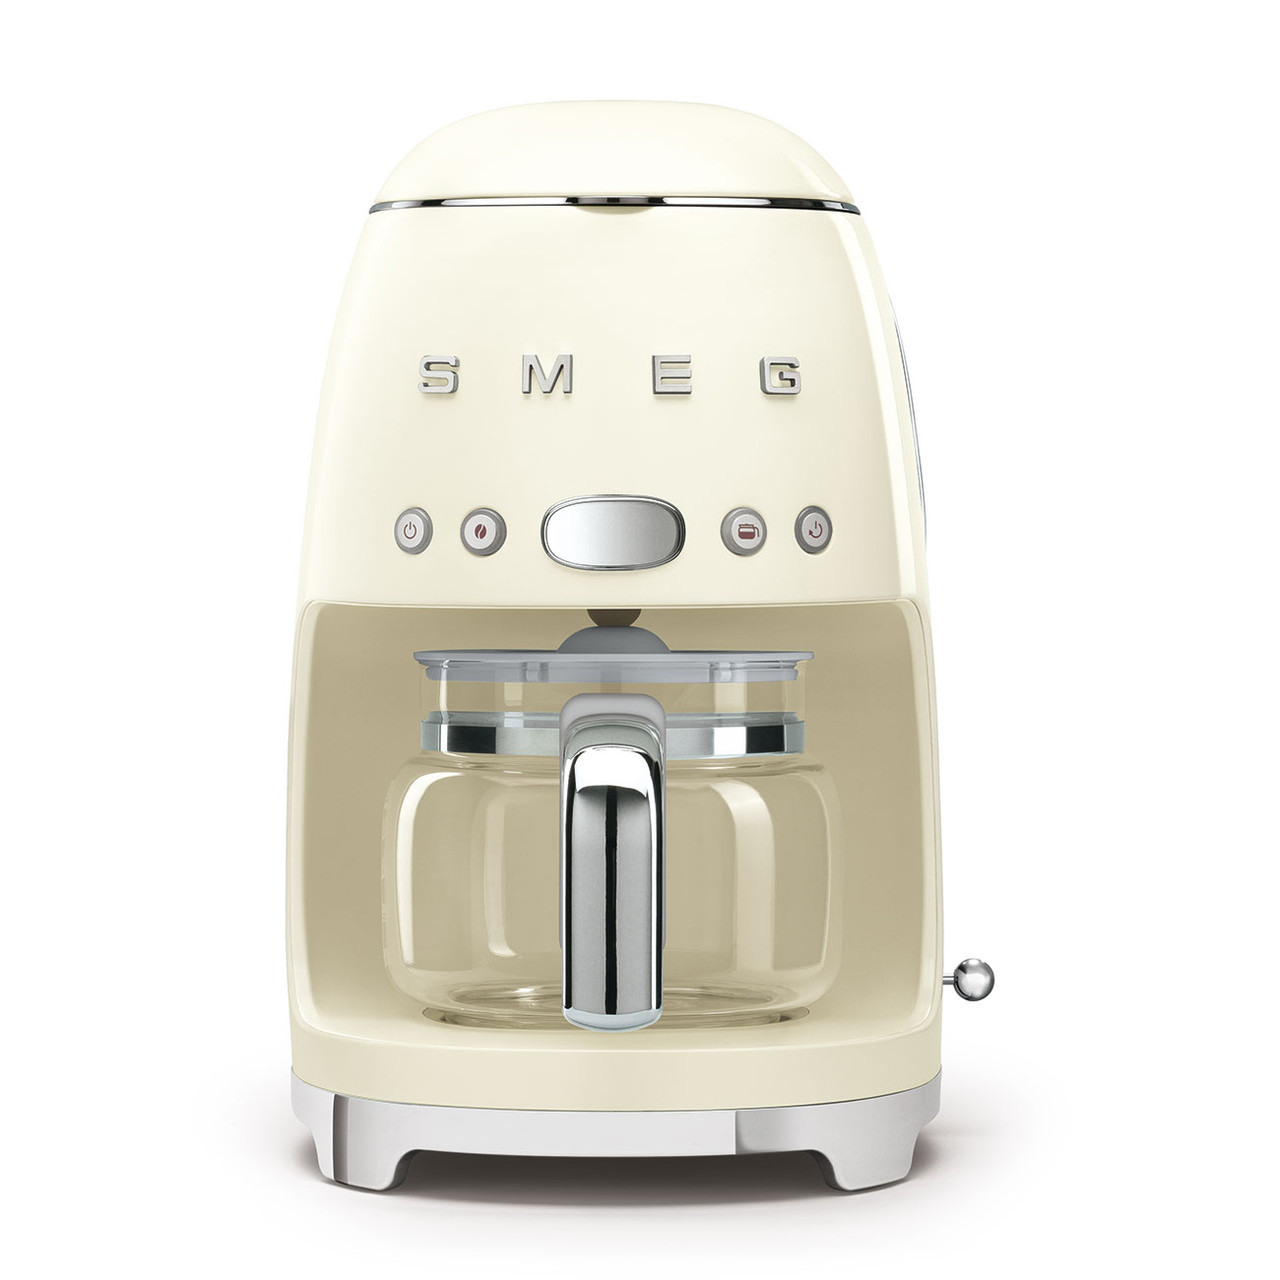 DCF02CRAU - Drip Coffee Machine, 50's Retro Style, CREAM